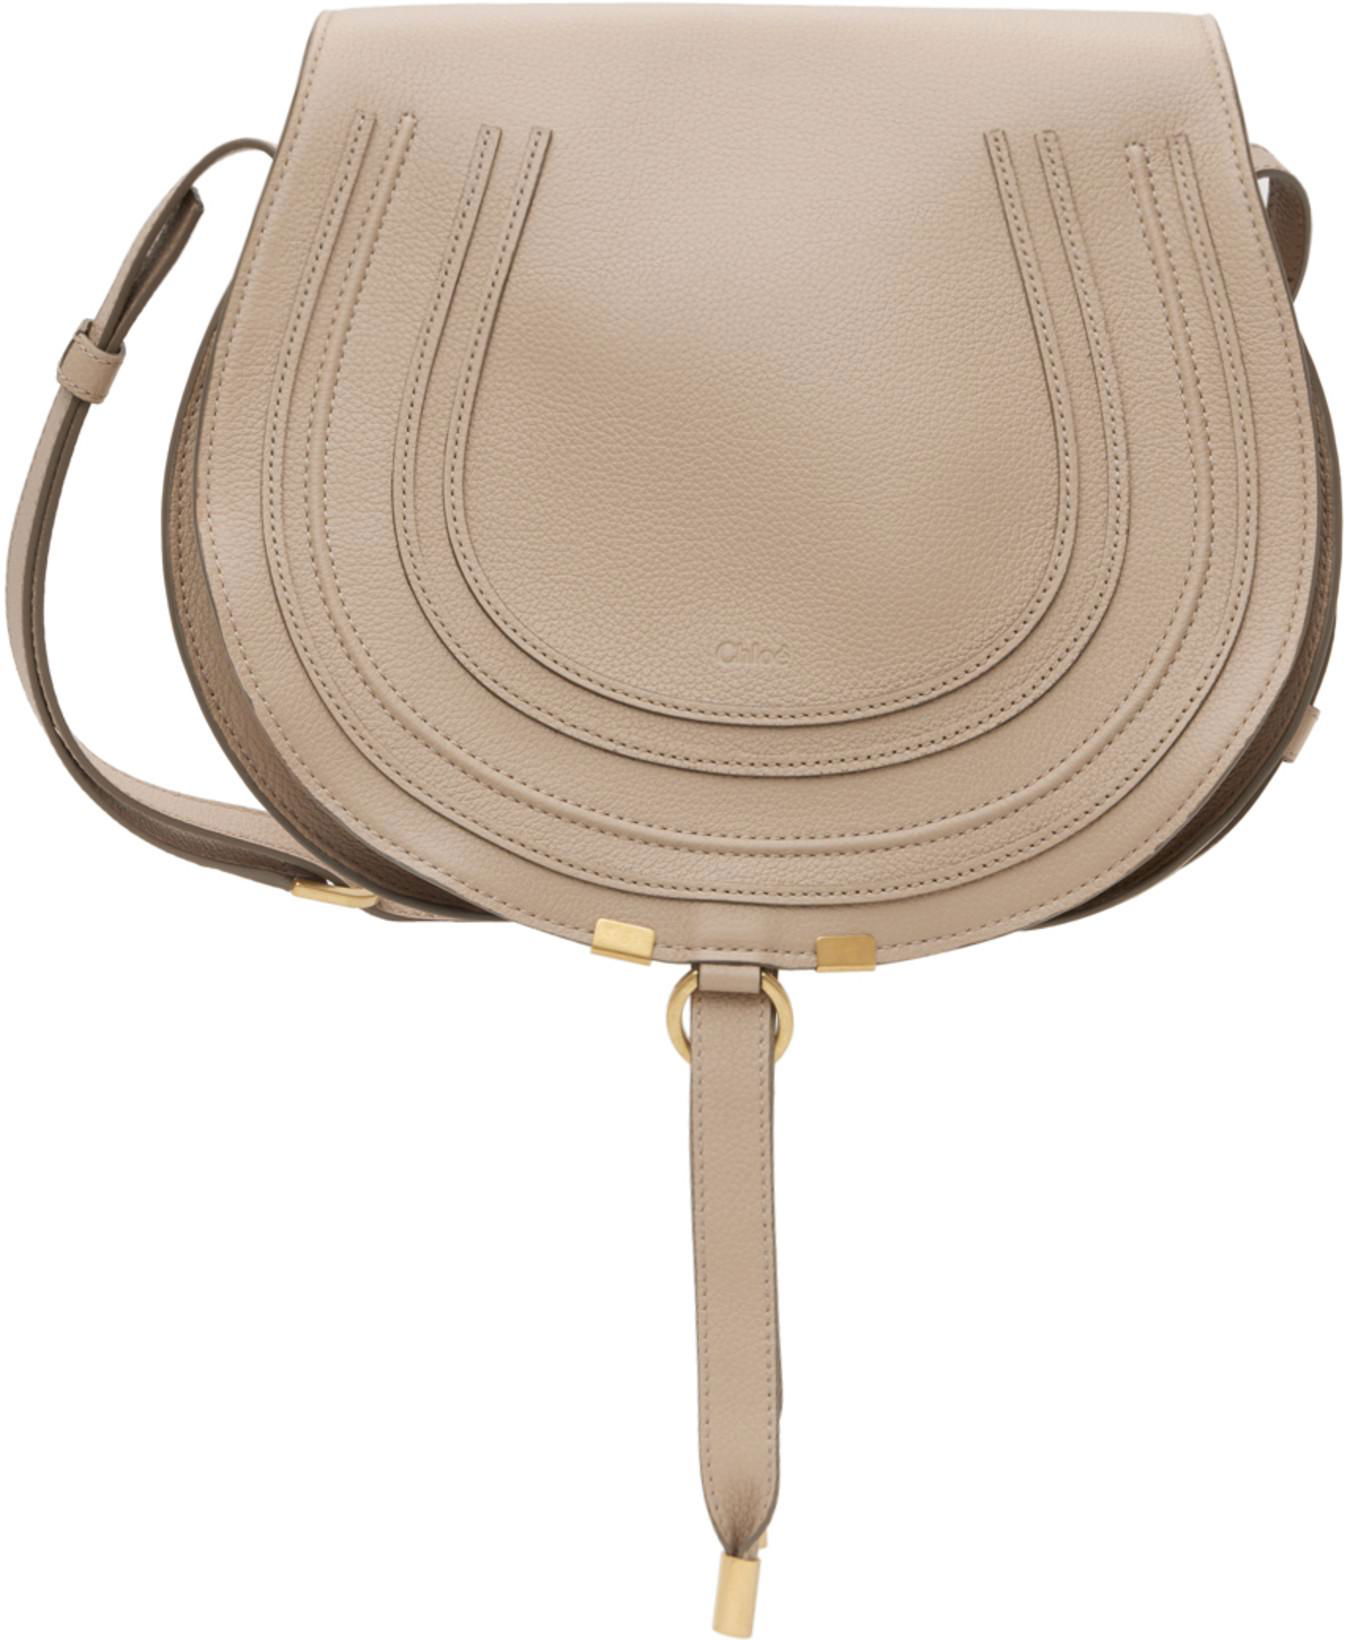 Tan Medium Marcie Saddle Bag by CHLOE